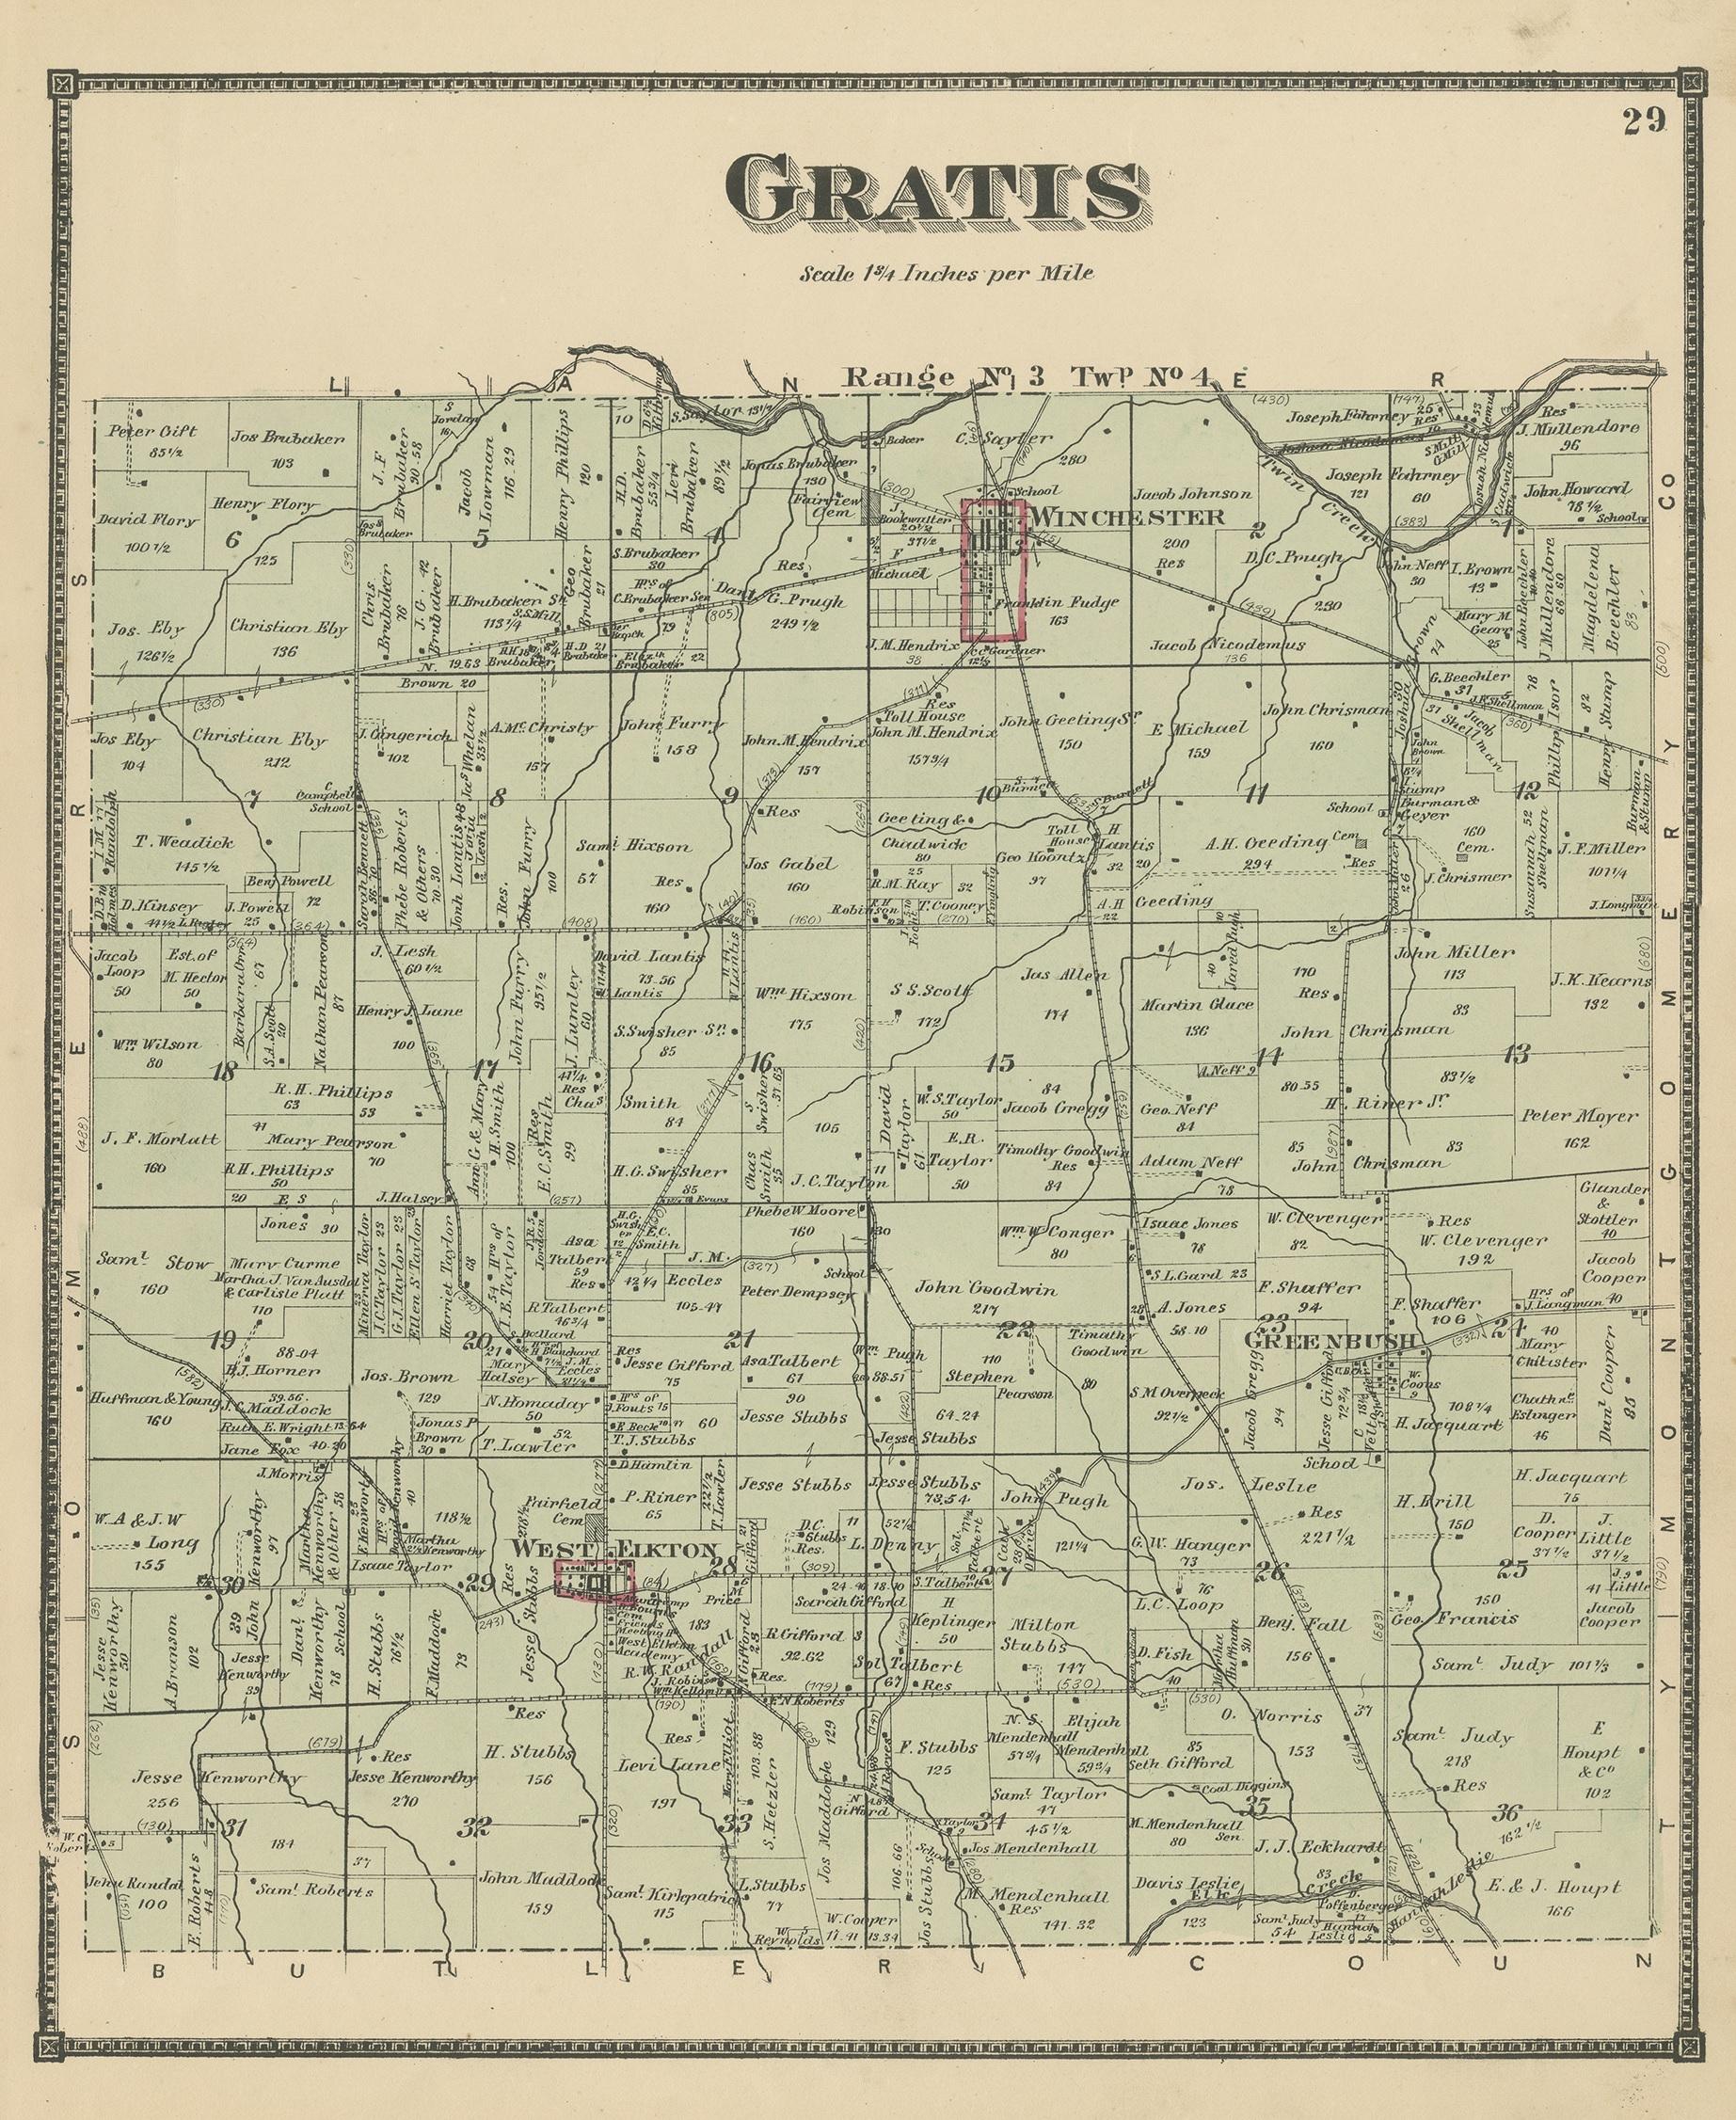 Antique map titled 'Gratis'. Original antique map of Gratis, Ohio. This map originates from 'Atlas of Preble County Ohio' by C.O. Titus. Published 1871.